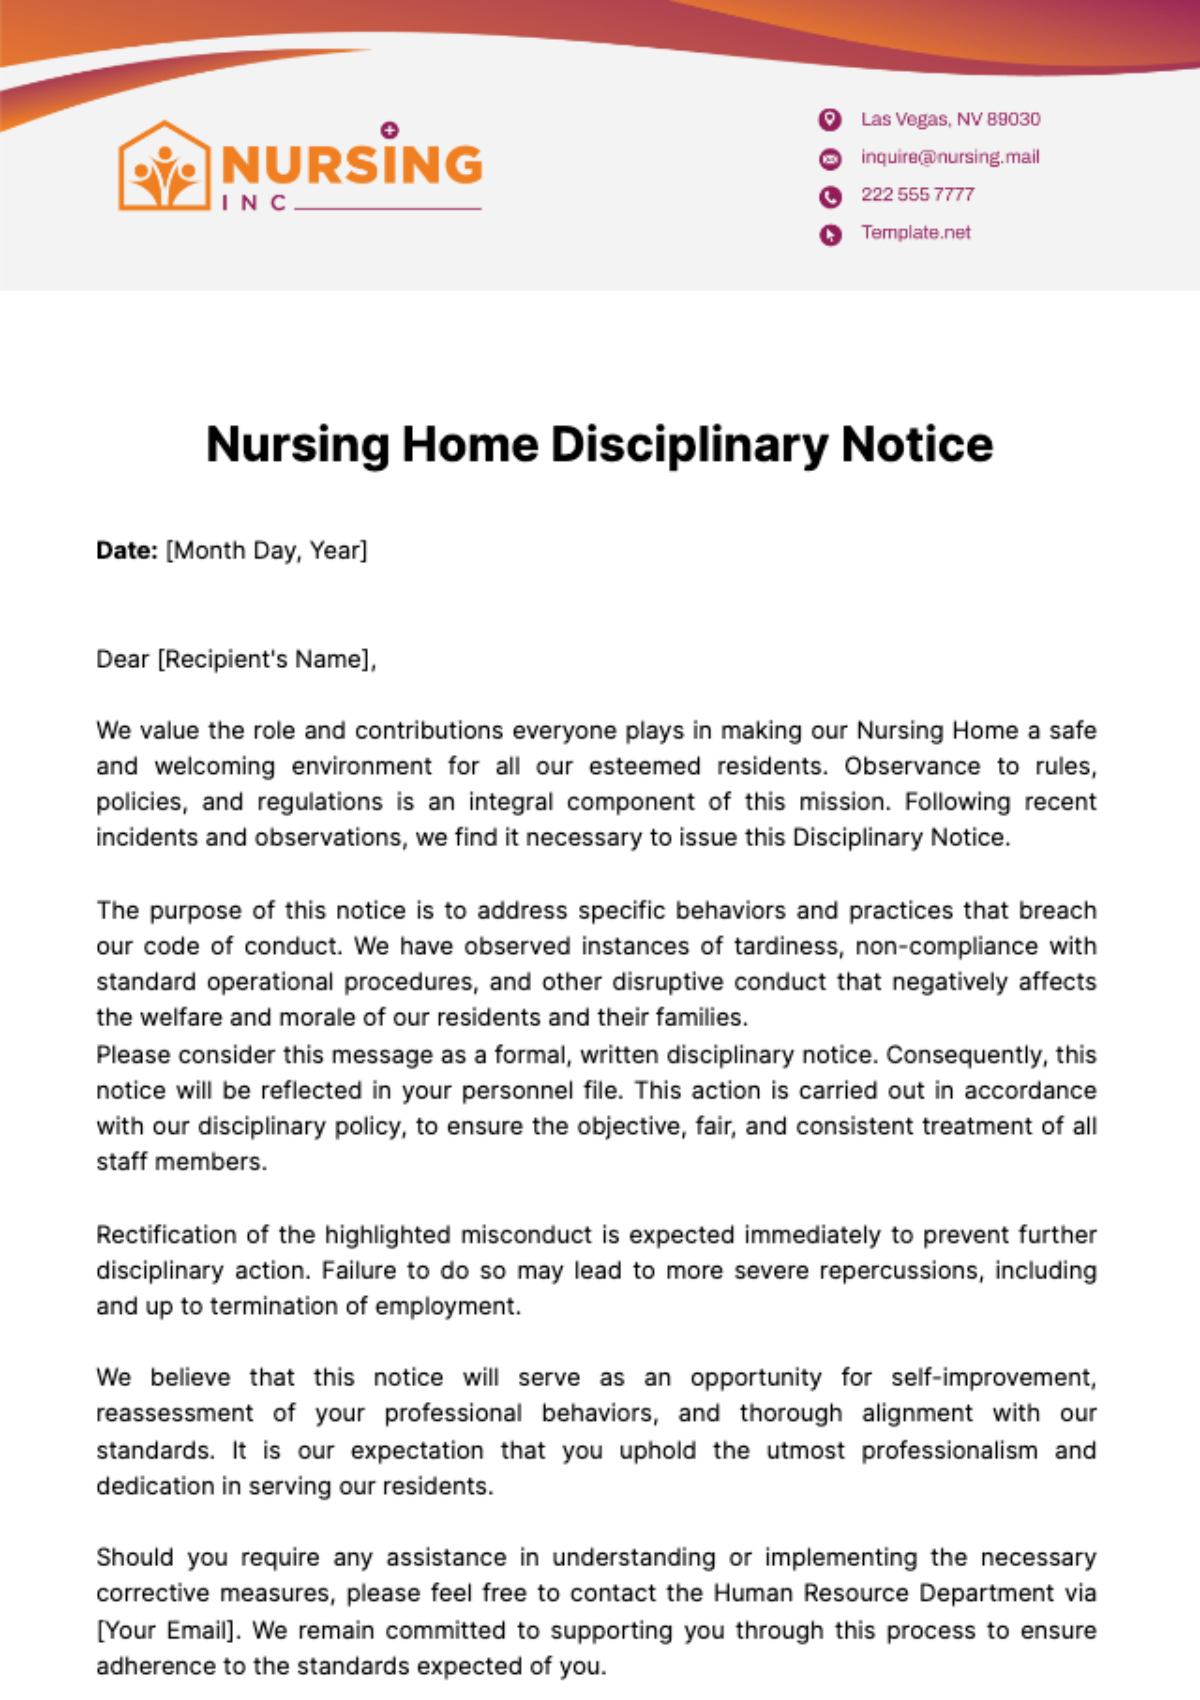 Nursing Home Disciplinary Notice Template